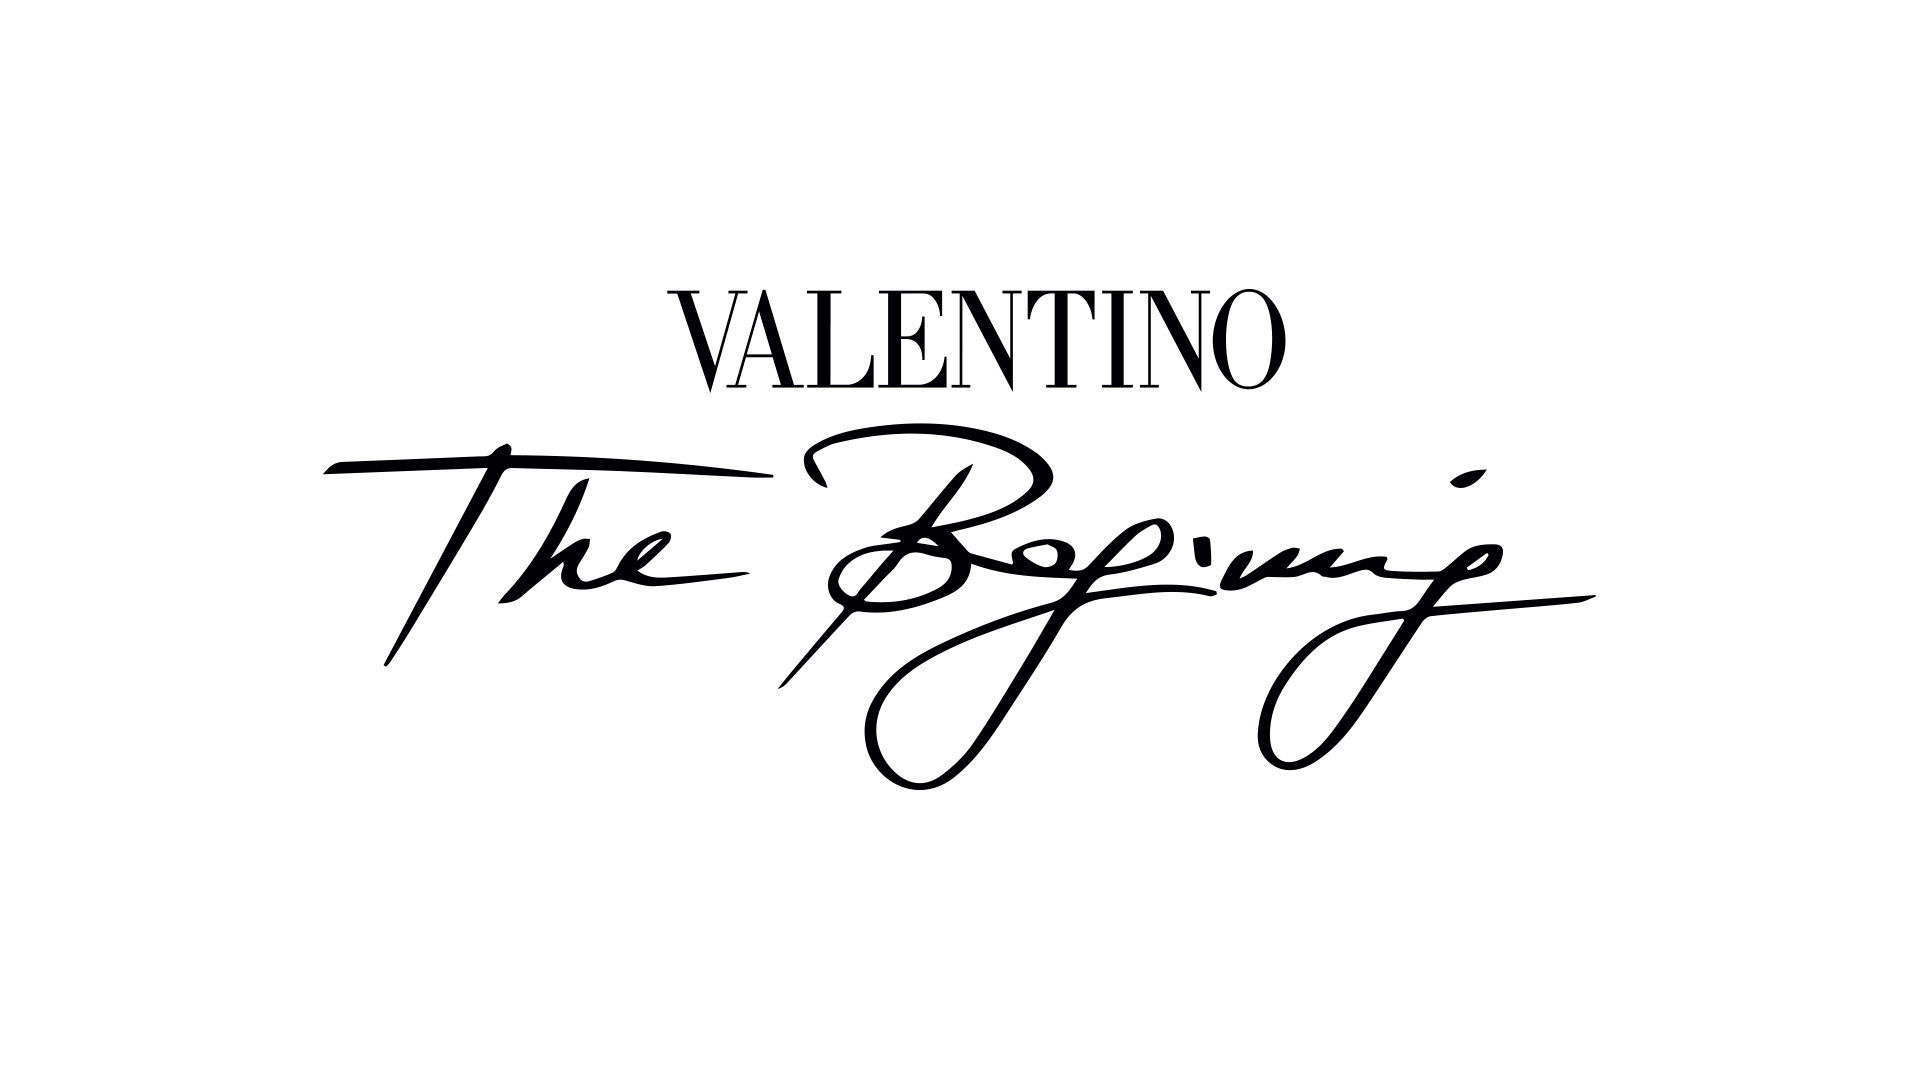 Valentino Logo Decal Sticker - AnyDecals.com